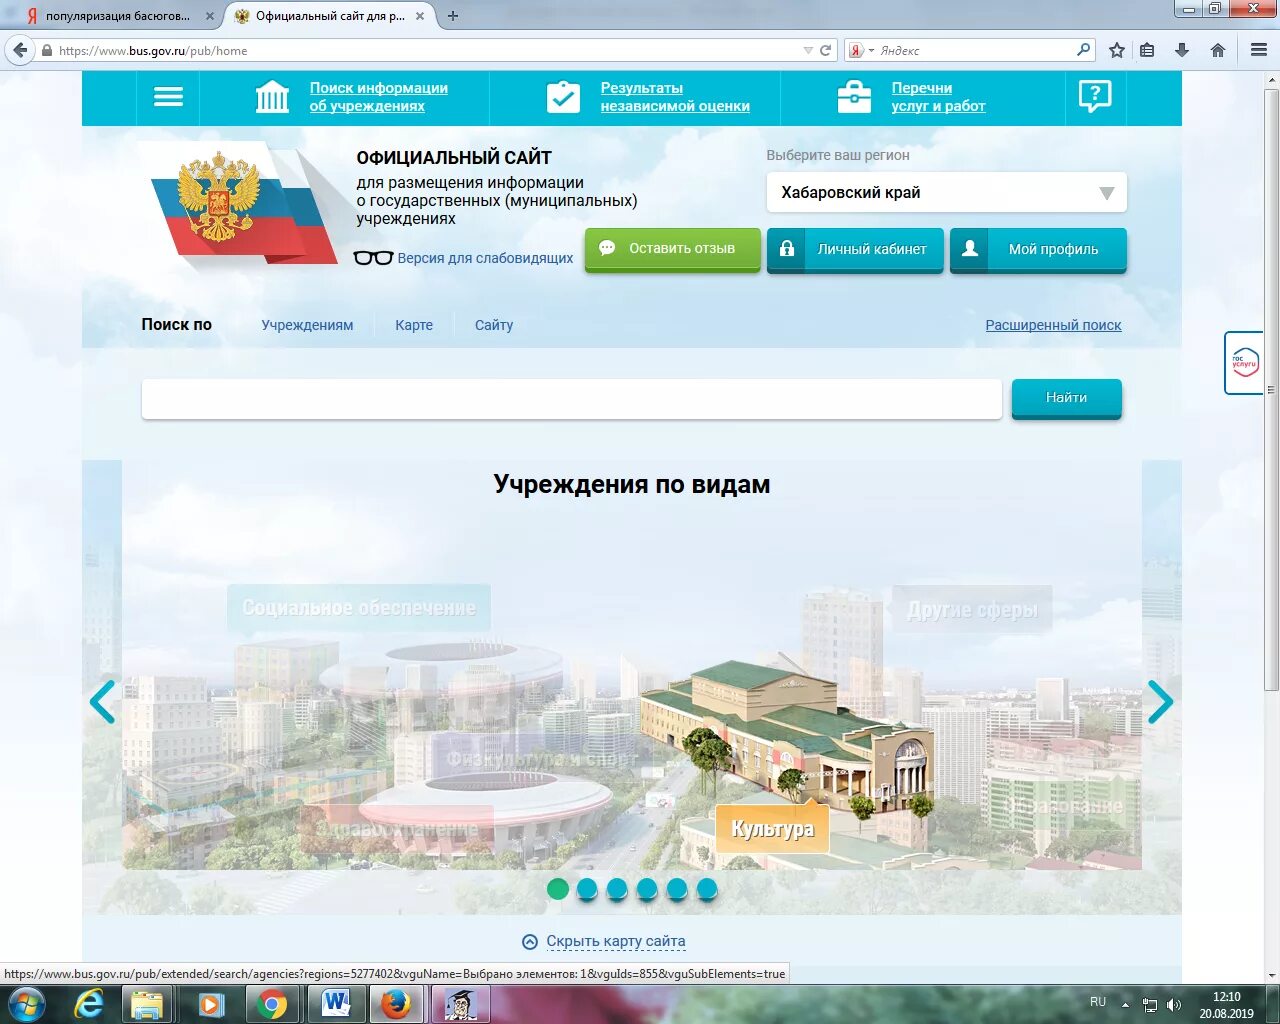 Бас гов. Bus.gov.ru баннер. Наша школа на Bus gov. Сайт бас гоф ру